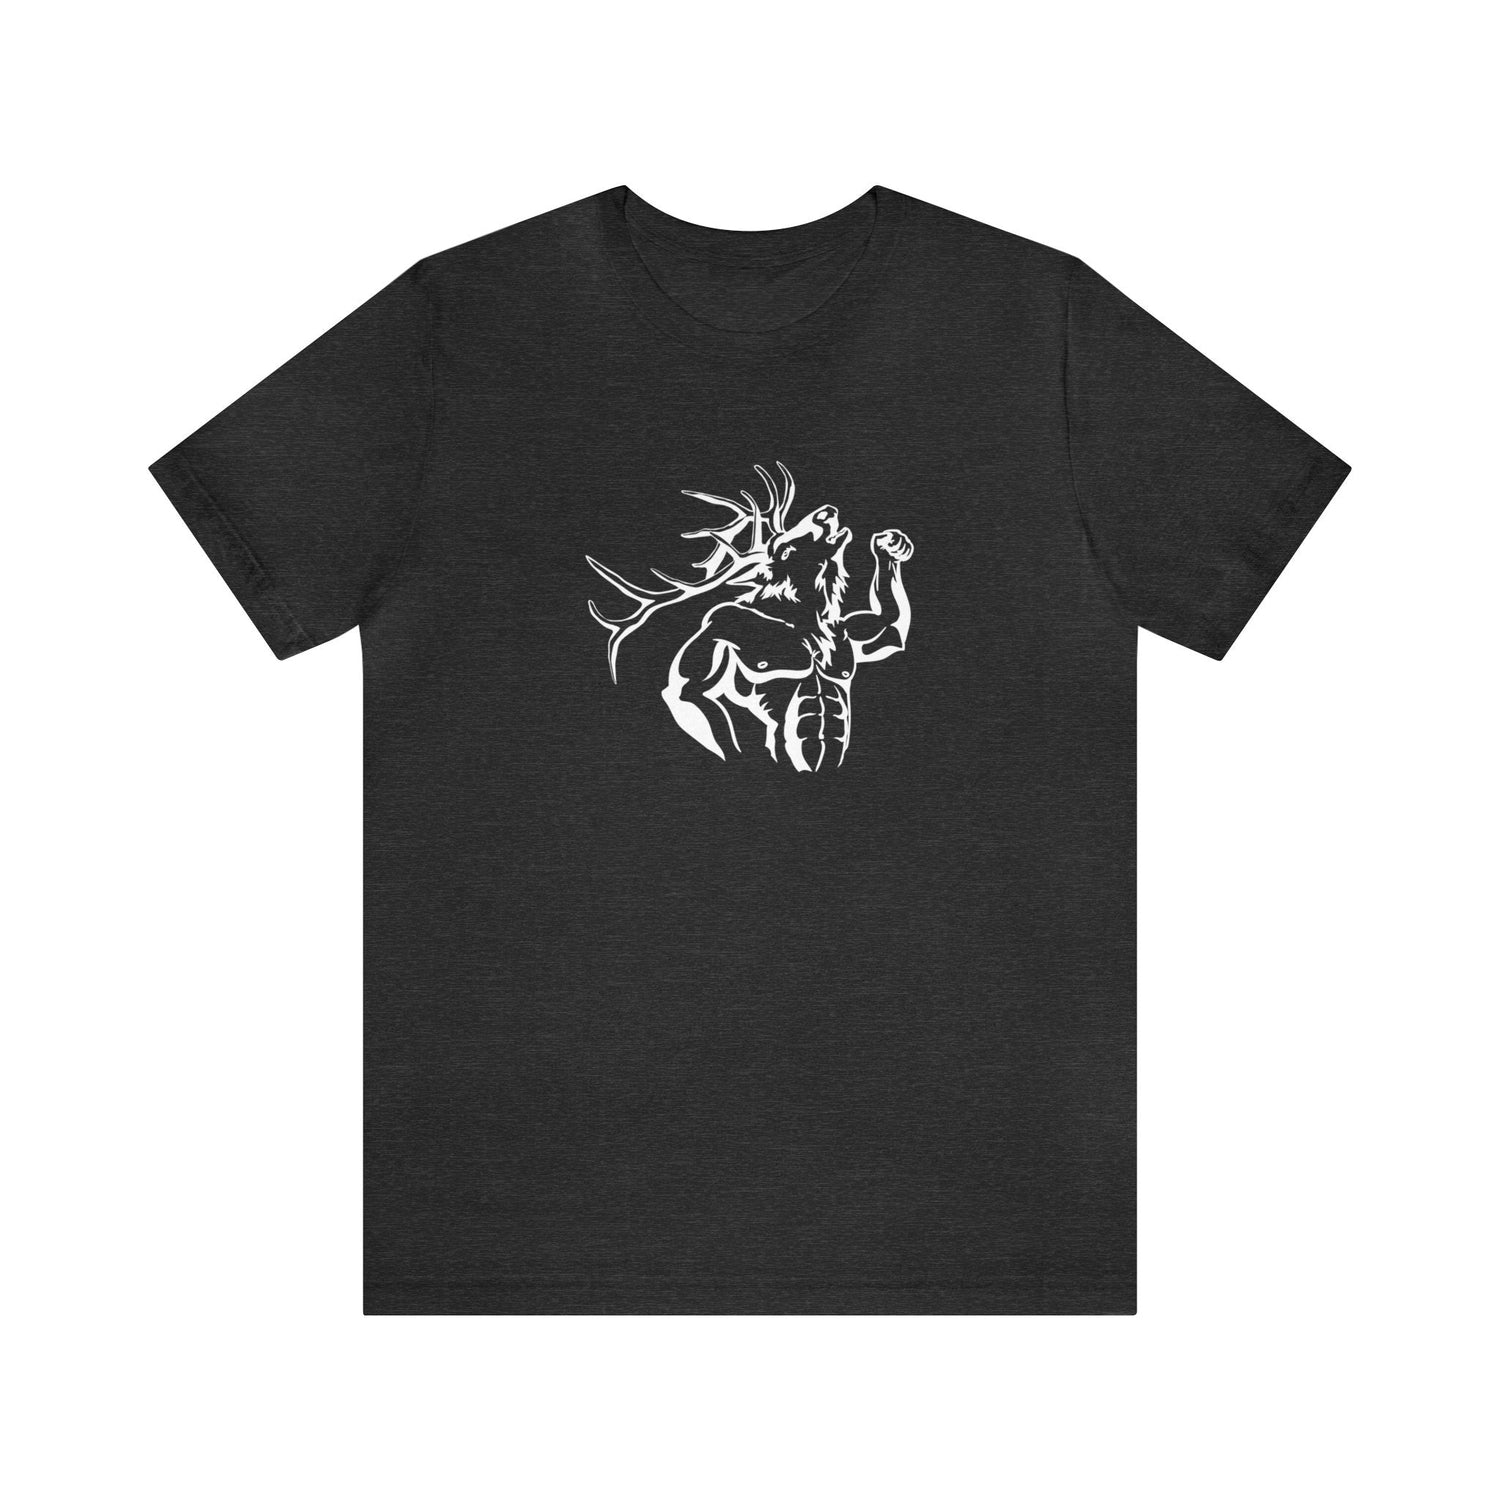 Western elk hunting t-shirt, color dark grey, front design placement